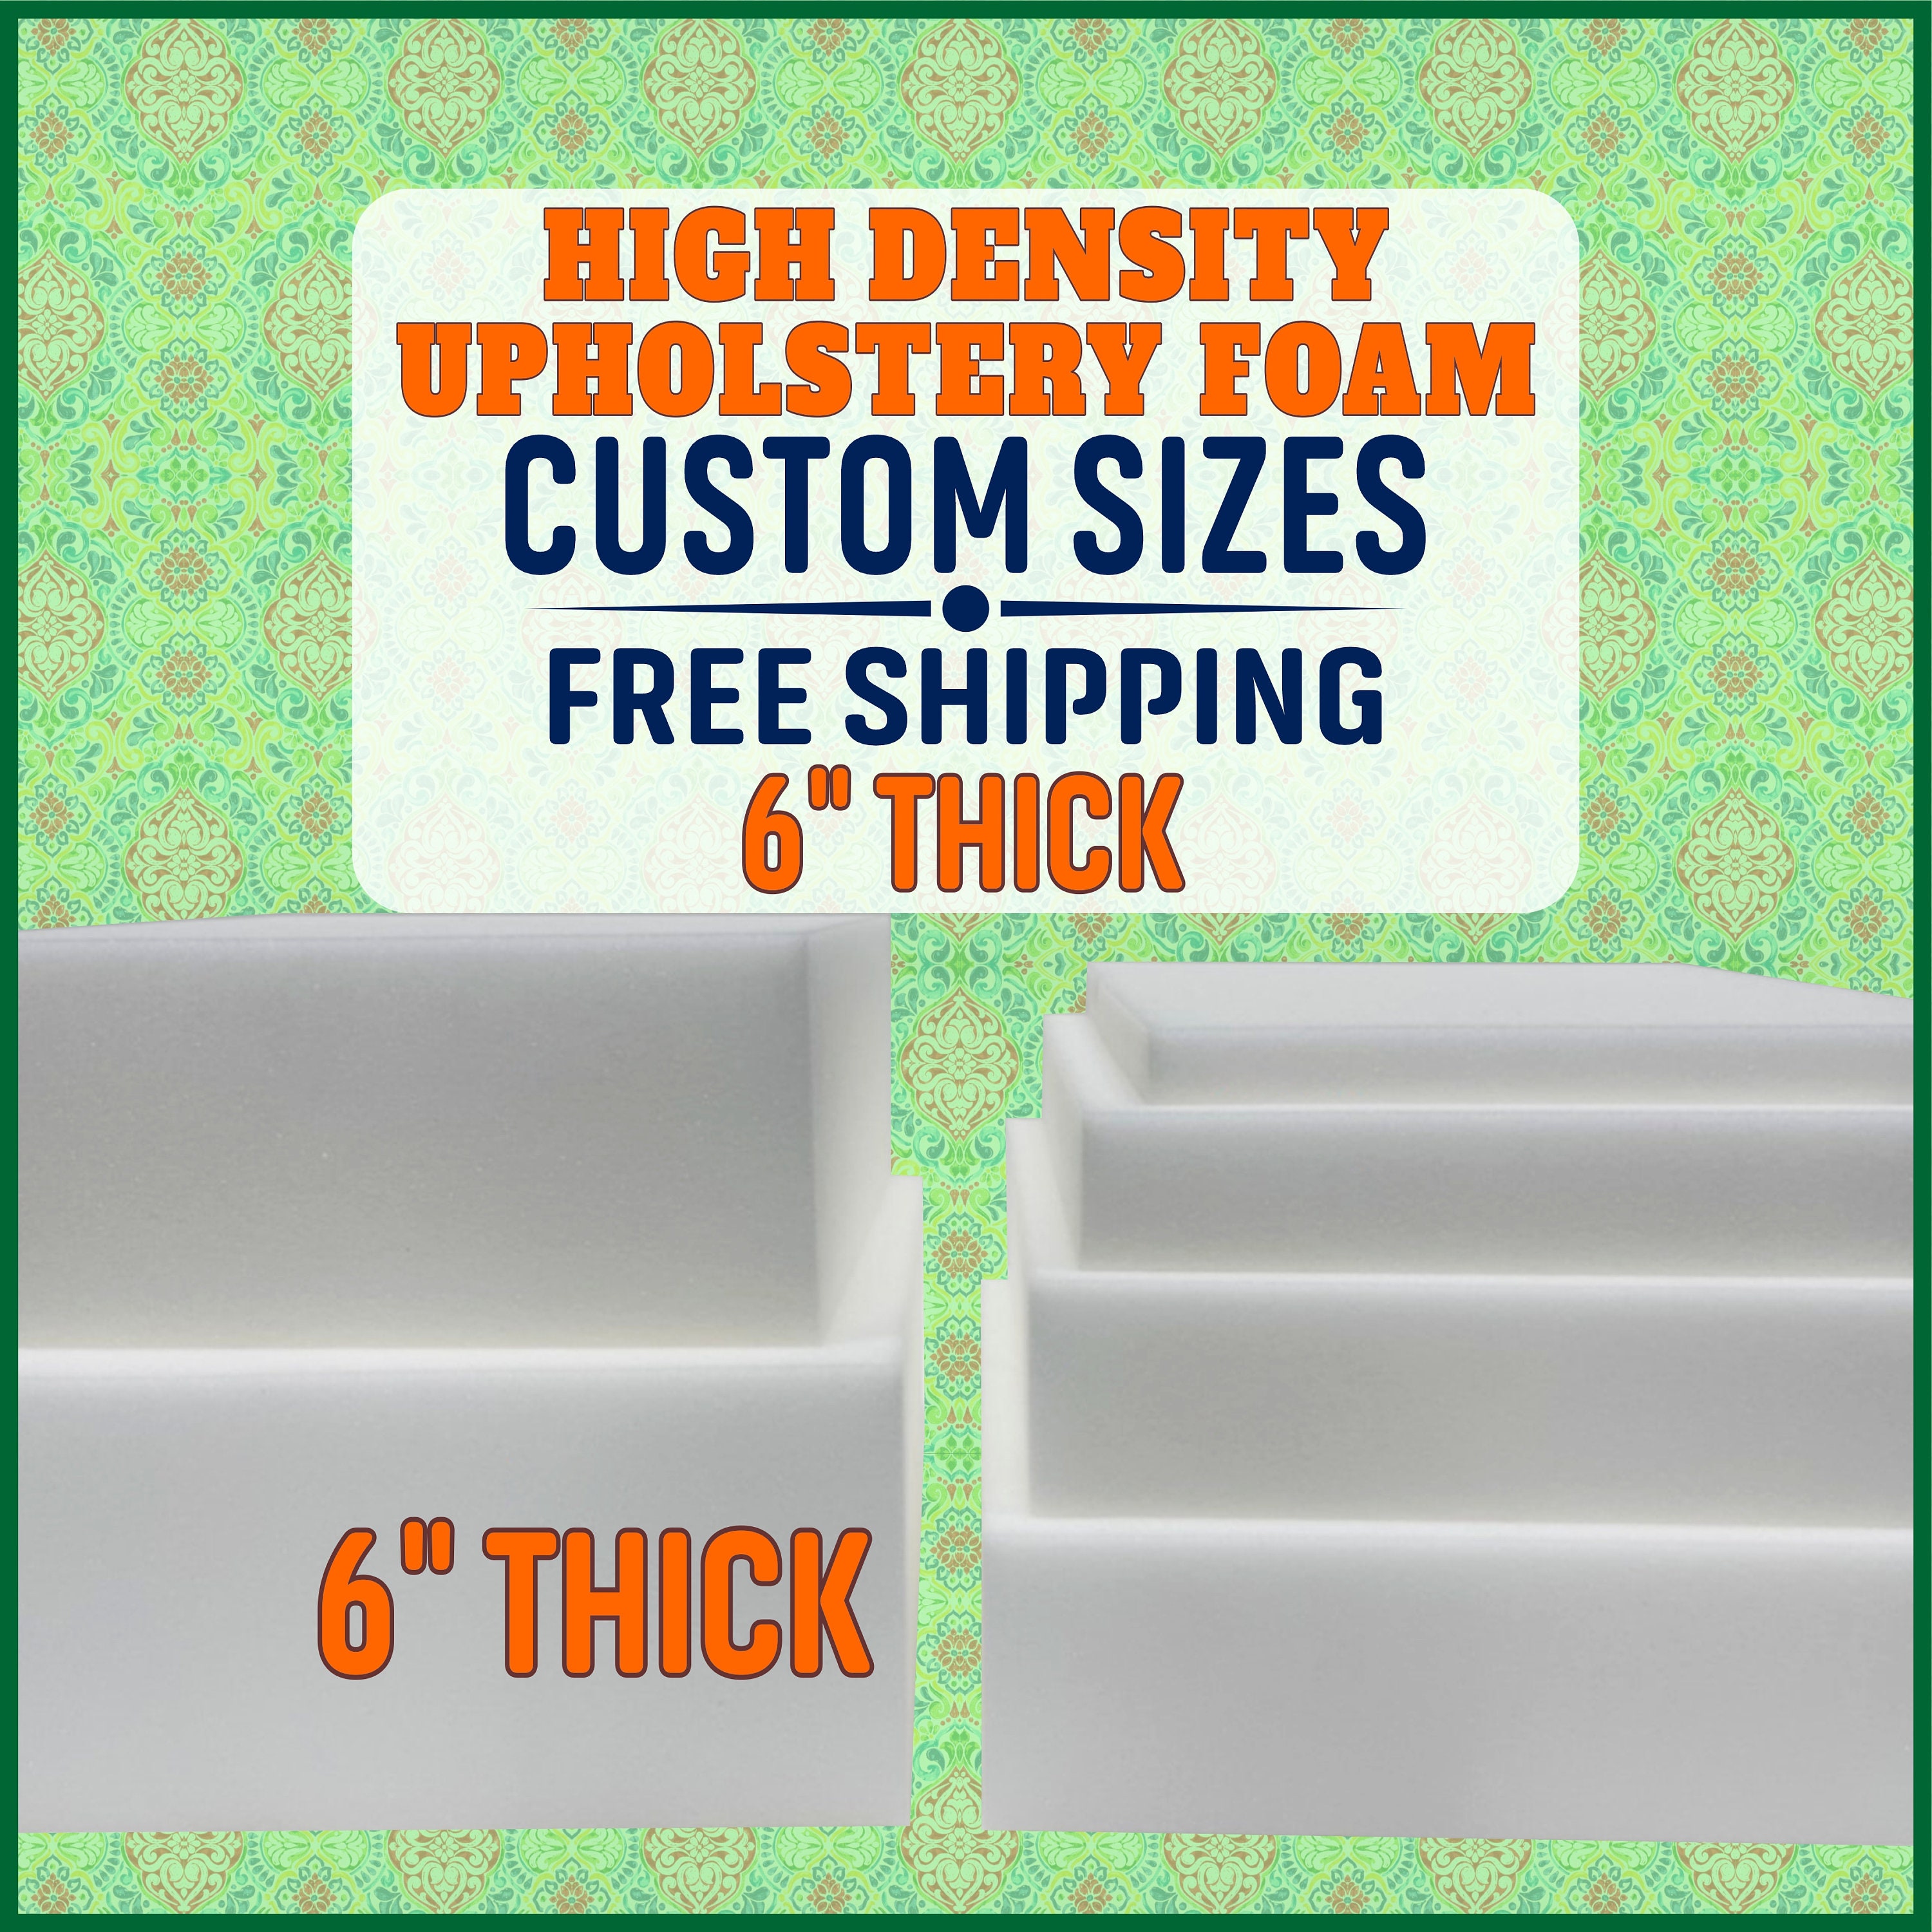 Foamma 4 x 20 x 60 High Density Upholstery Foam Cushion (Seat  Replacement, Upholstery Sheet, Foam Padding) Made in USA!!